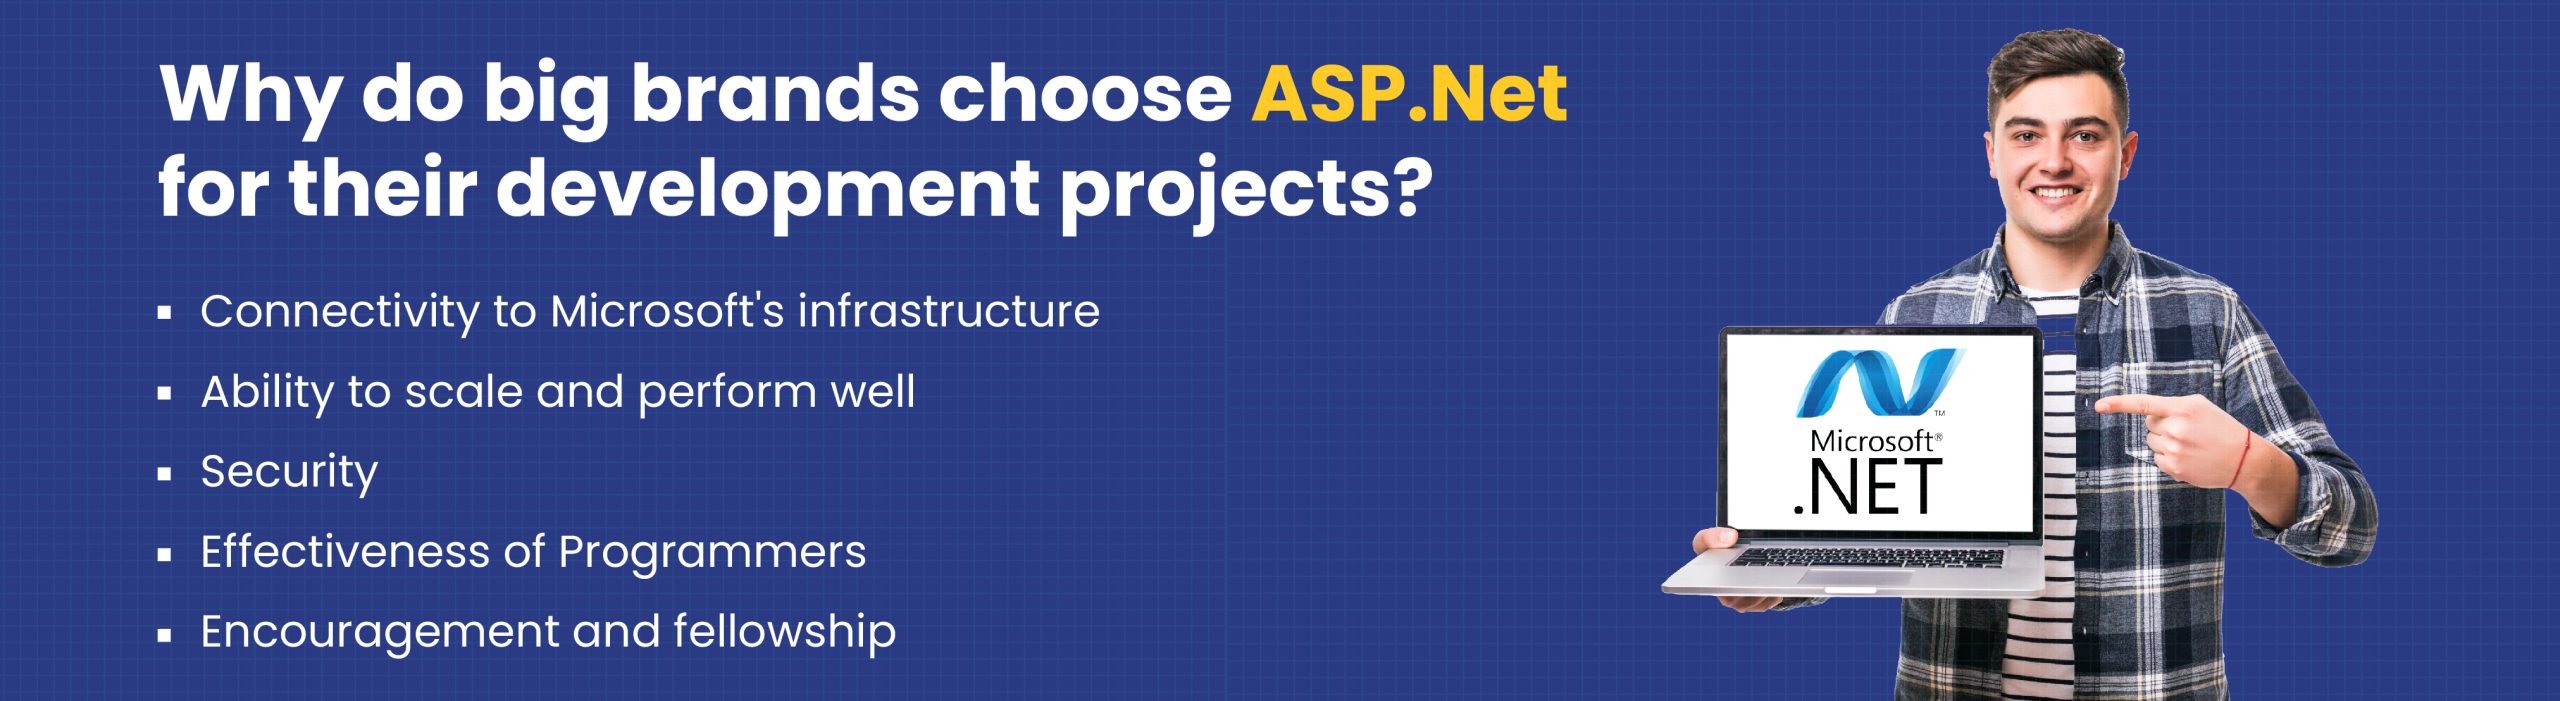 why big brands choose asp.net